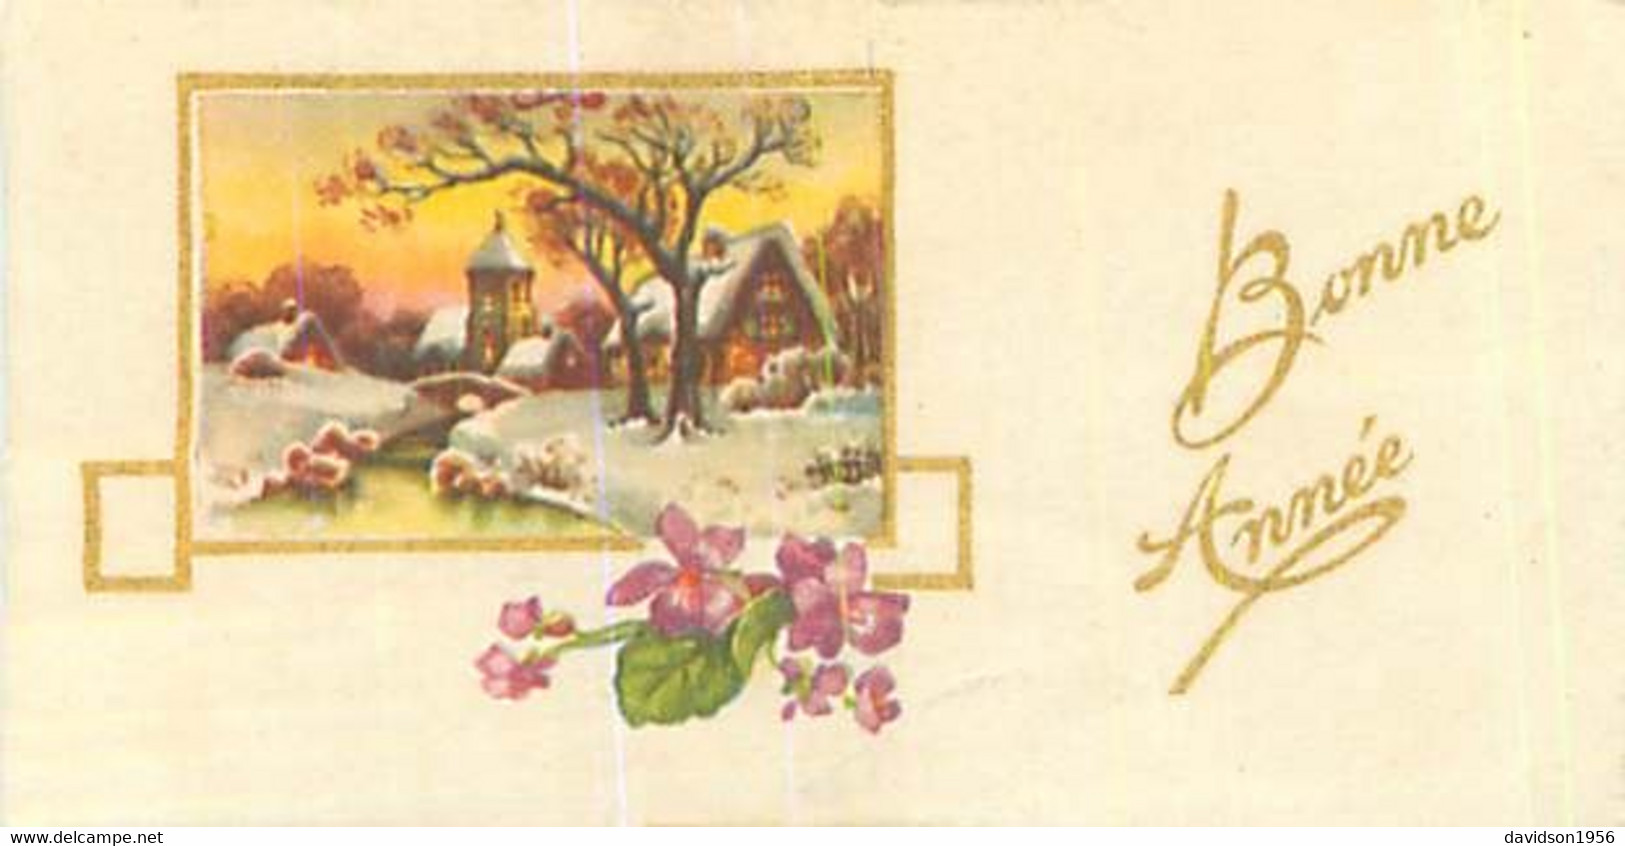 Carte Mignonette - Bonne Année  , Fleurs   W714 - Anno Nuovo